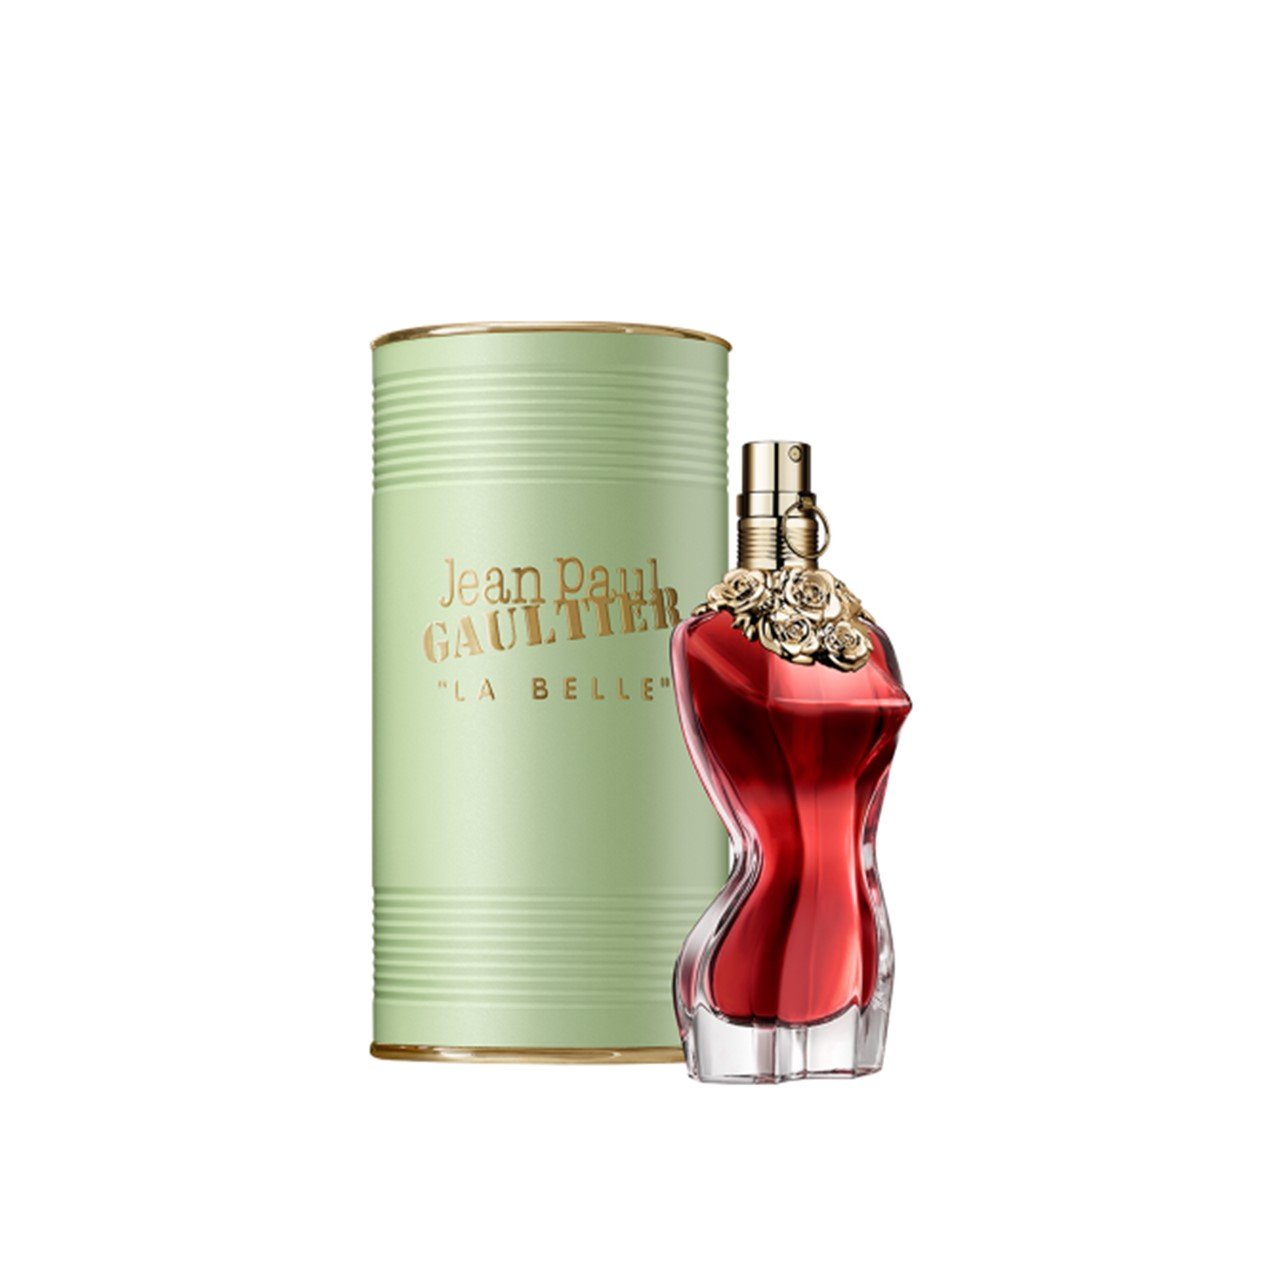 Buy Jean Paul Gaultier oz) La Eau 50ml (1.7fl · de Parfum Belle USA